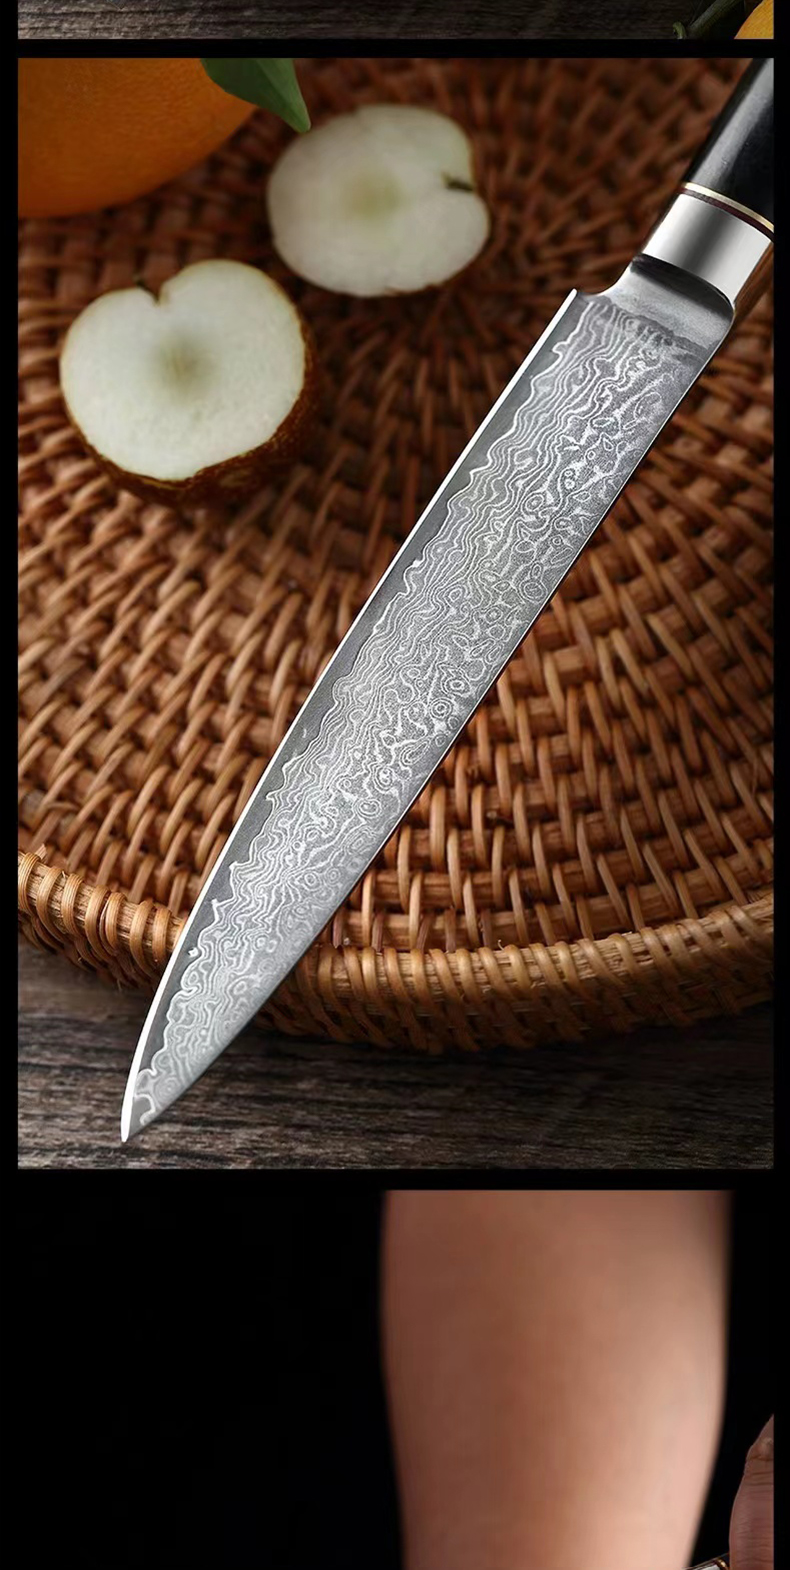 Damascus all purpose knife